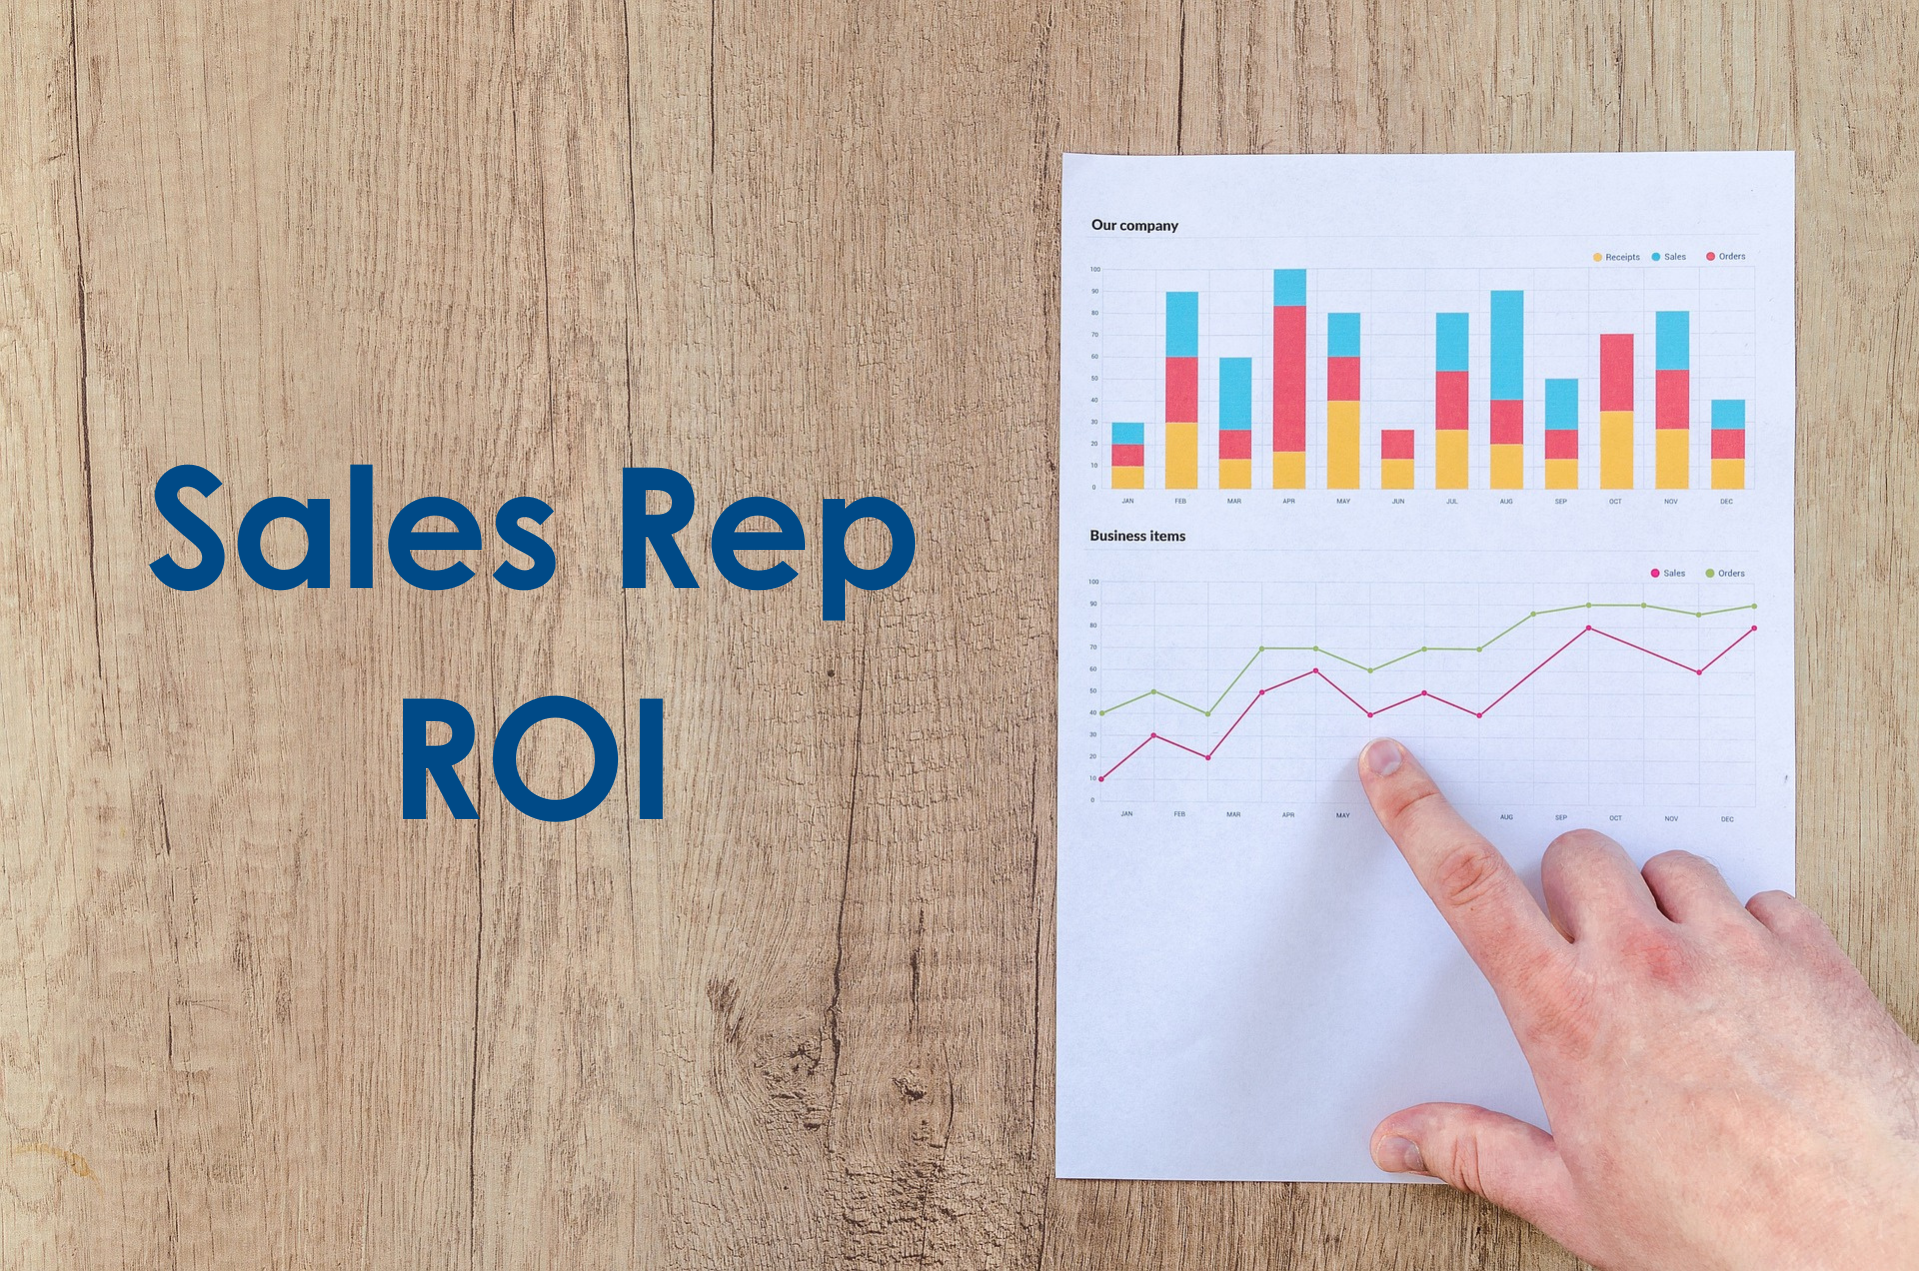 How Do You Measure Sales Rep ROI